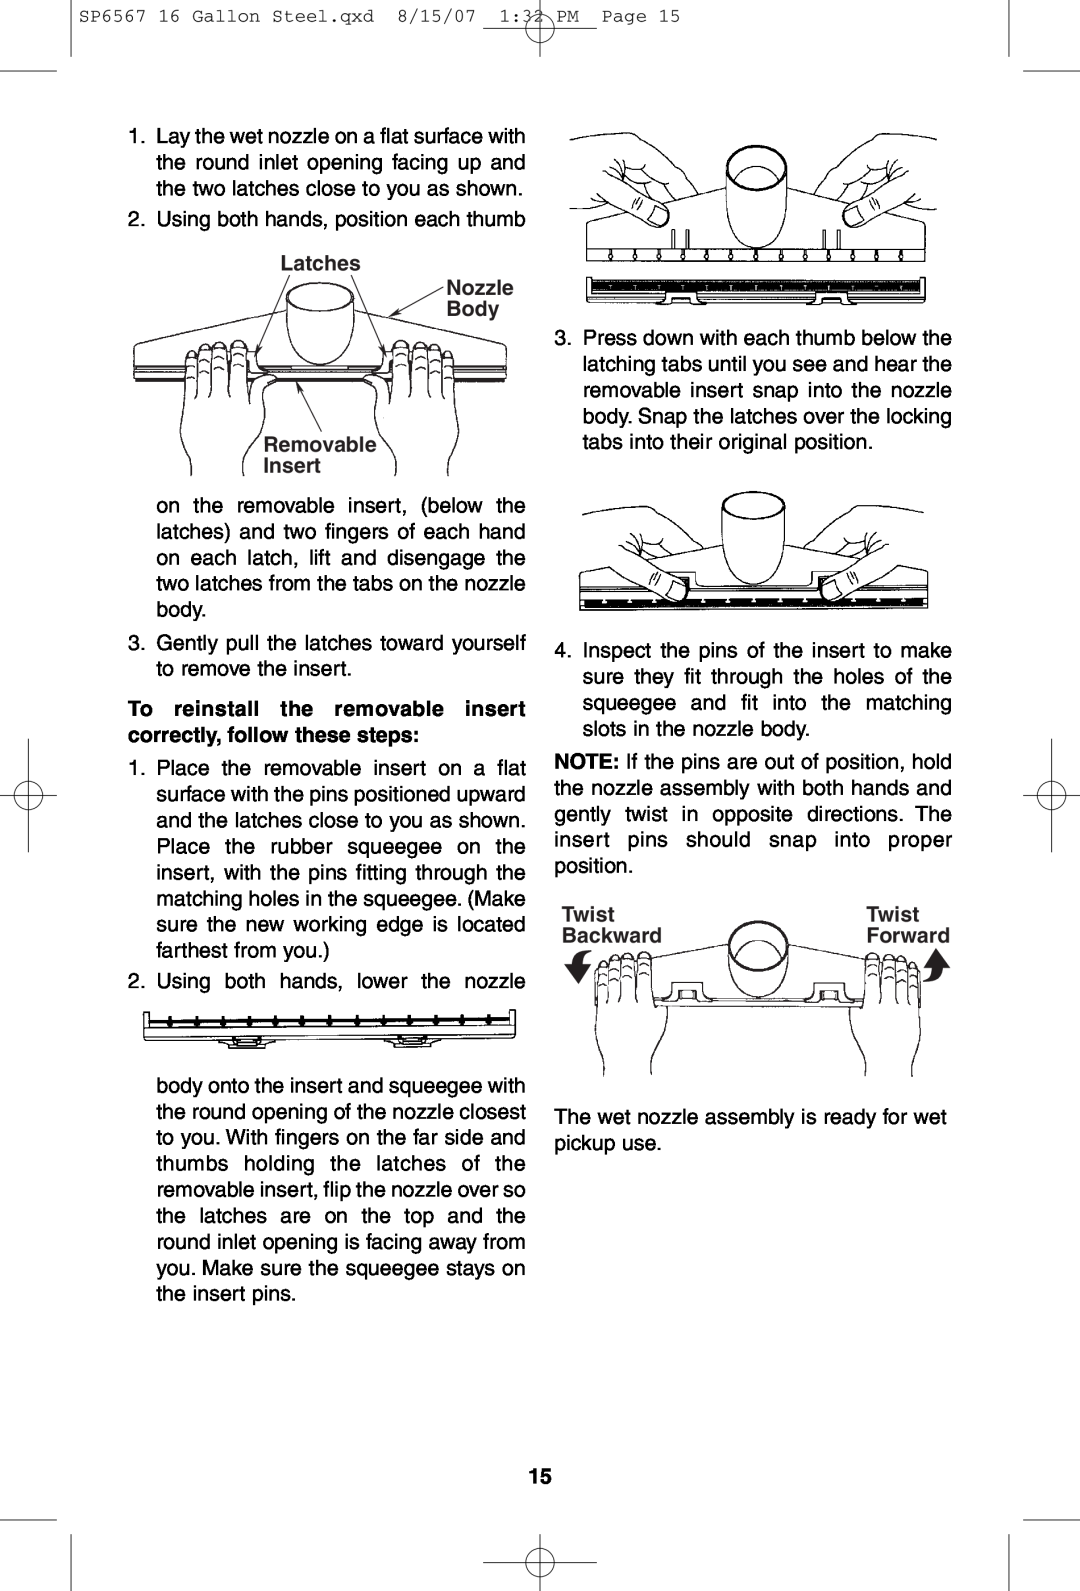 RIDGID WD1950 manual Latches Nozzle Body Removable Insert, Twist, Backward, Forward 